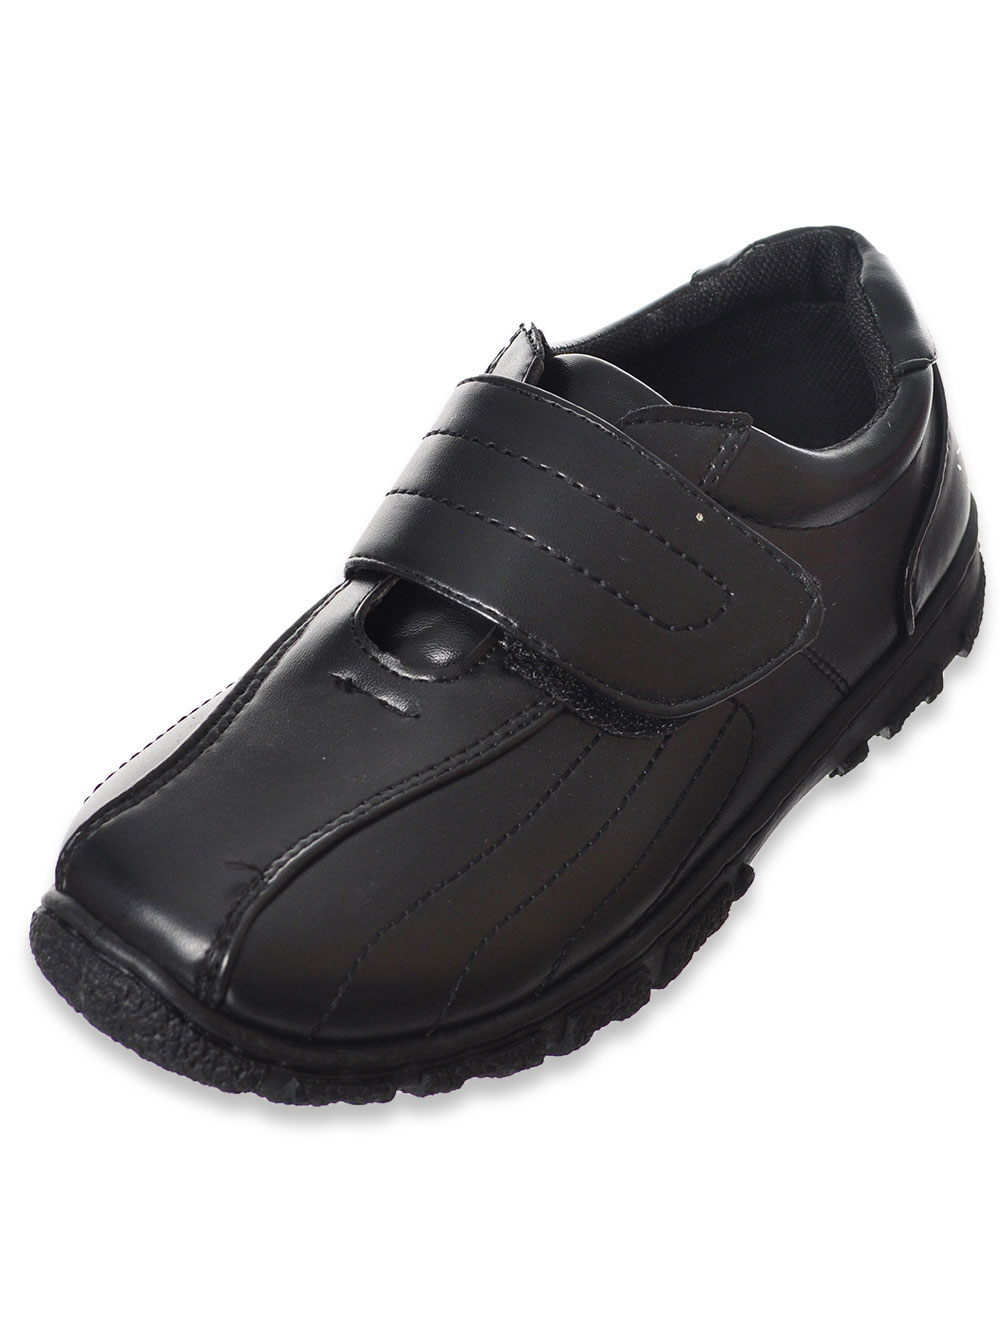 narrow fit boys school shoes